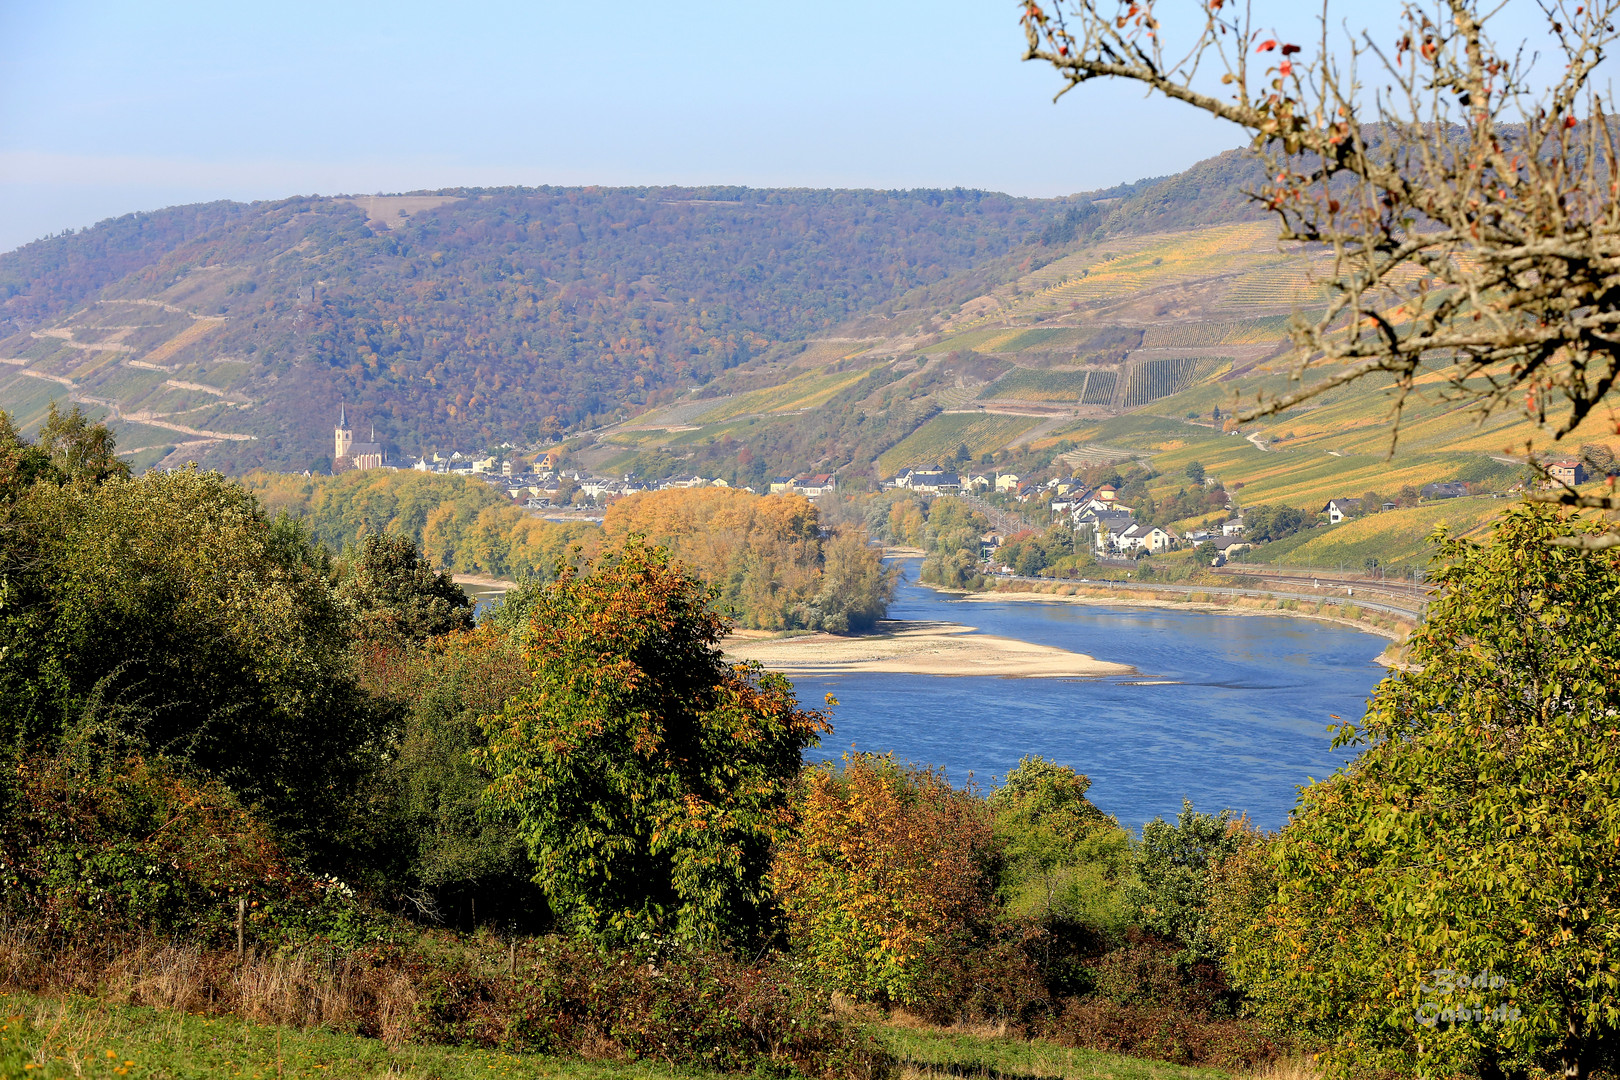 Rekord-Niedrigwasser am Rhein